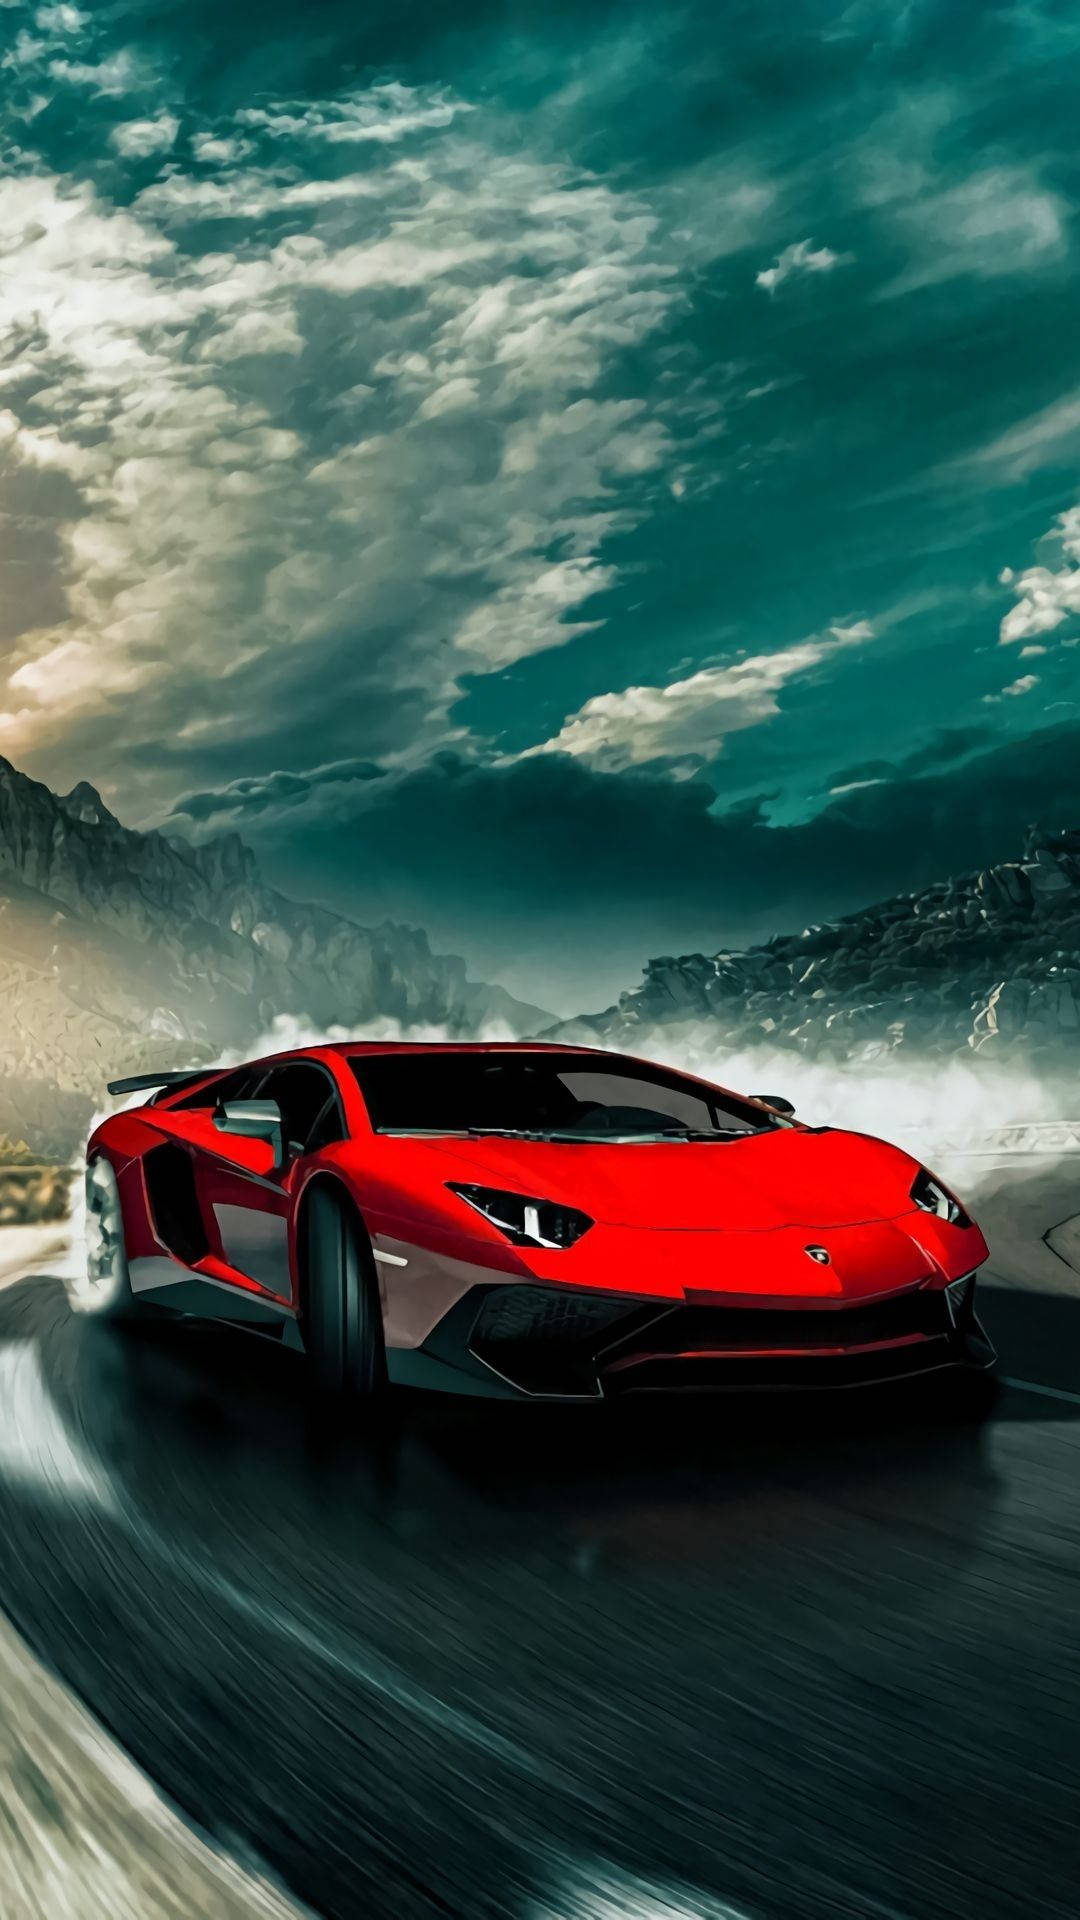  Lamborghini Aventador Hintergrundbild 1080x1920. Download Red Lamborghini Aventador Power and Luxury Wallpaper